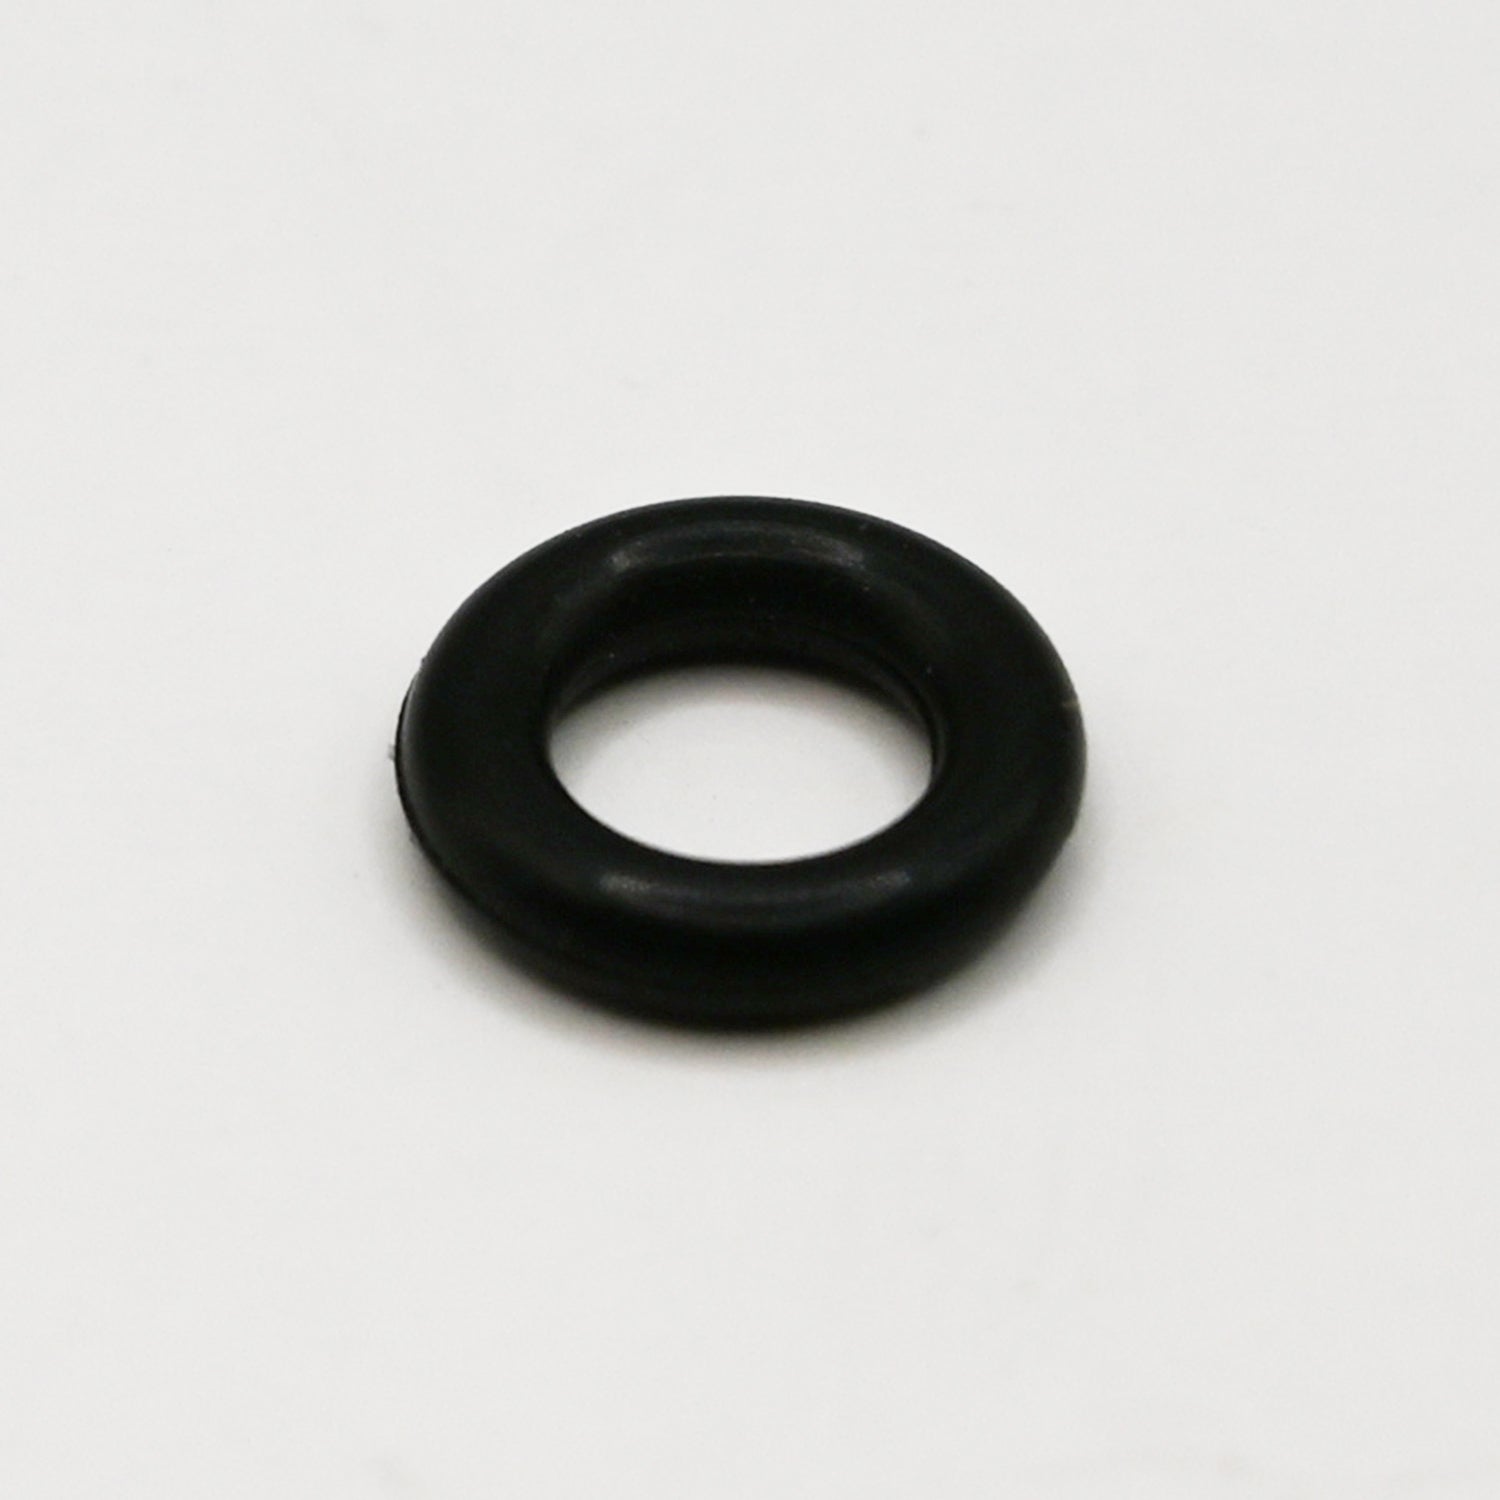 Black rubber O-Ring on white background. 